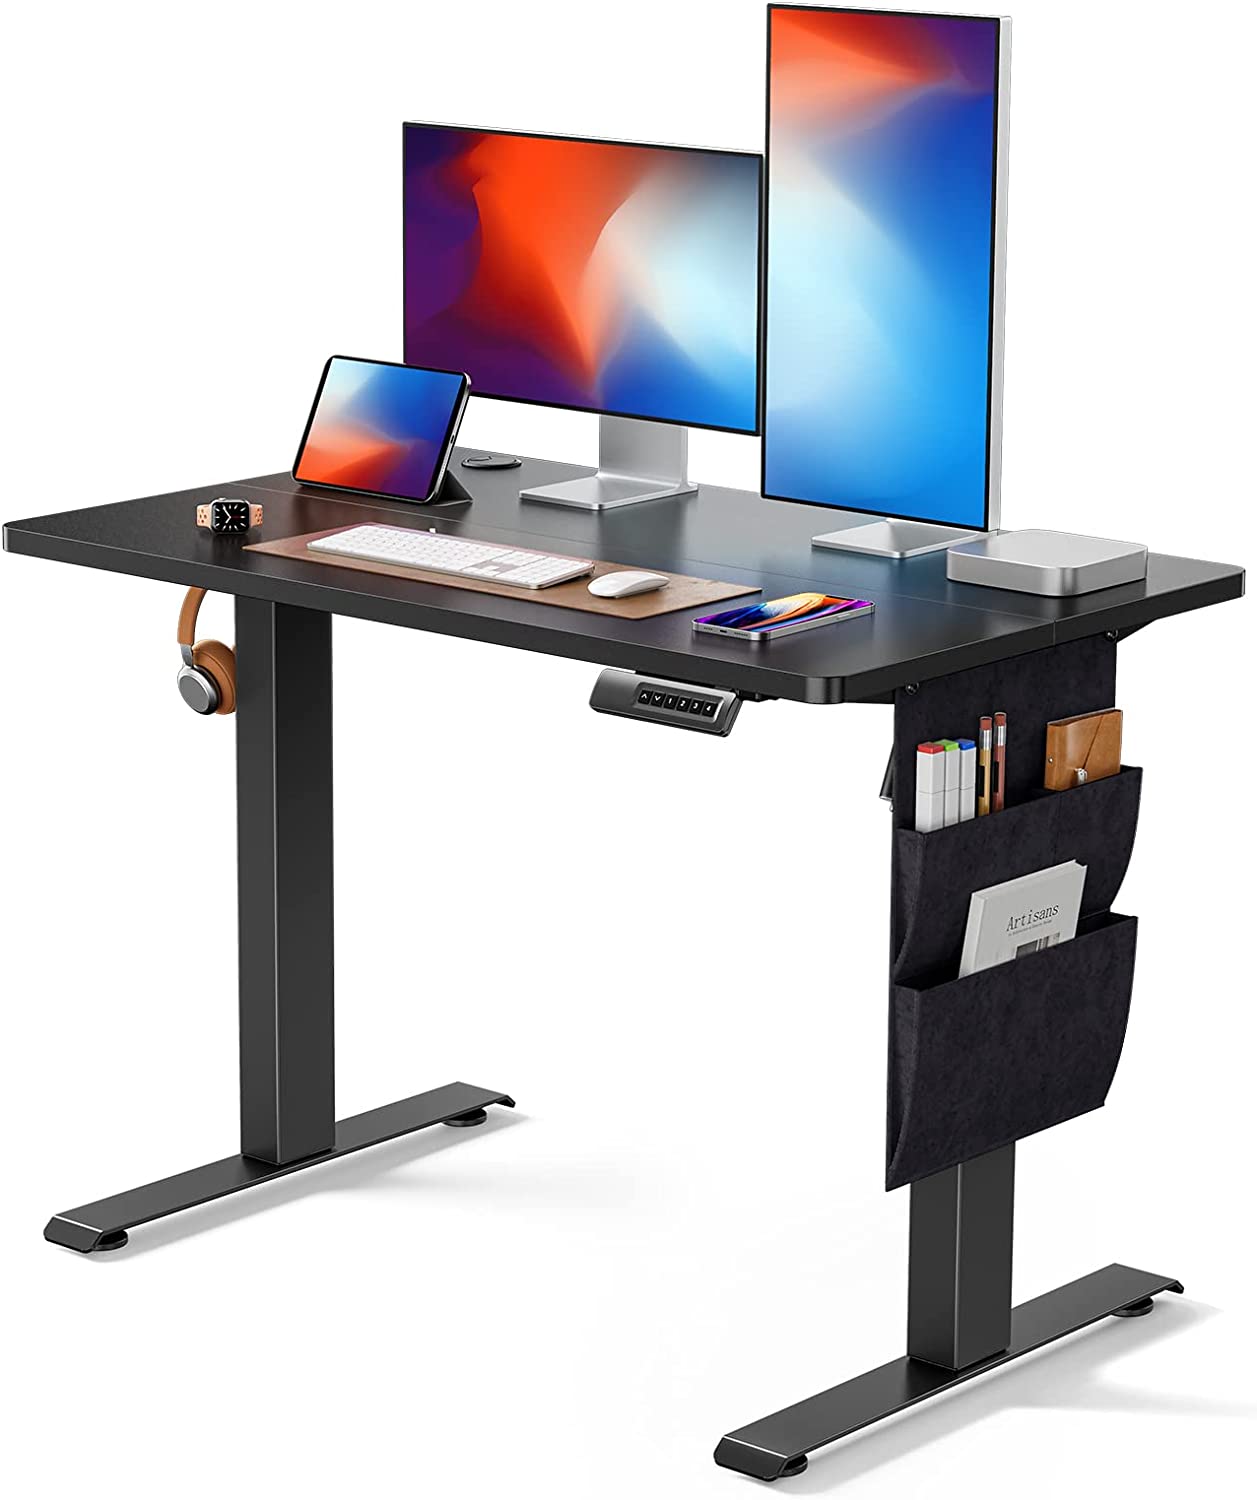 Marsail Electric Standing Desk Adjustable Height with Storage Bag (40 * 24 Inch, Black/Dark Black) for $114.99